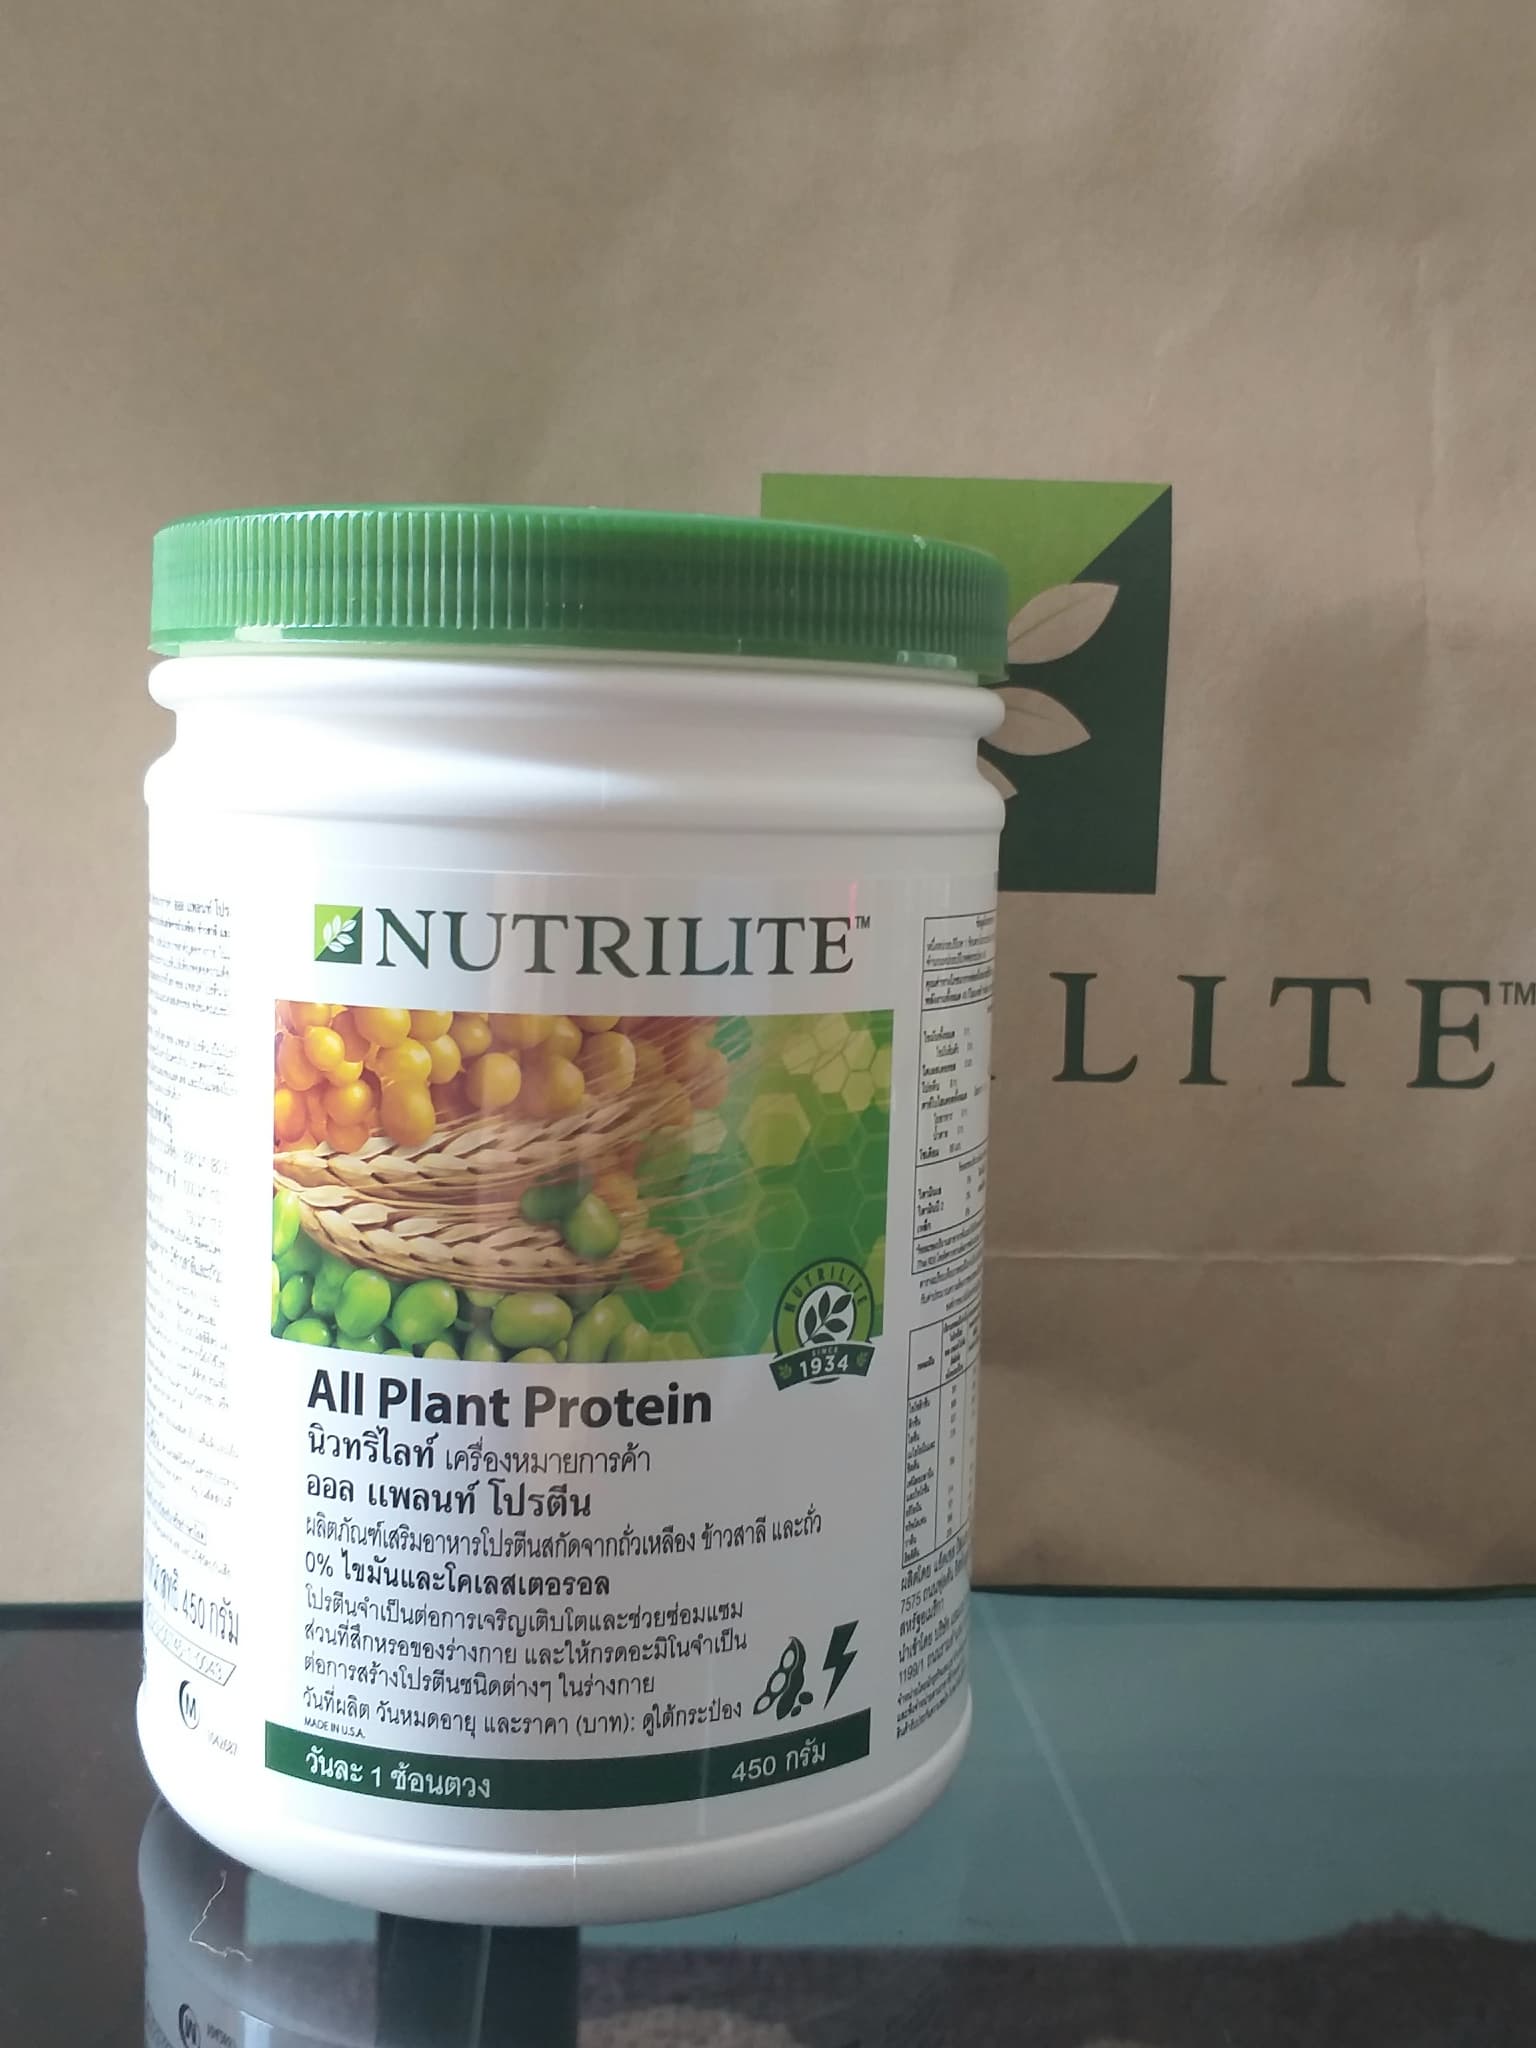 All plant Protein  นิวทรีไลท์ ออลแพลนท์ โปรตีน 450 g